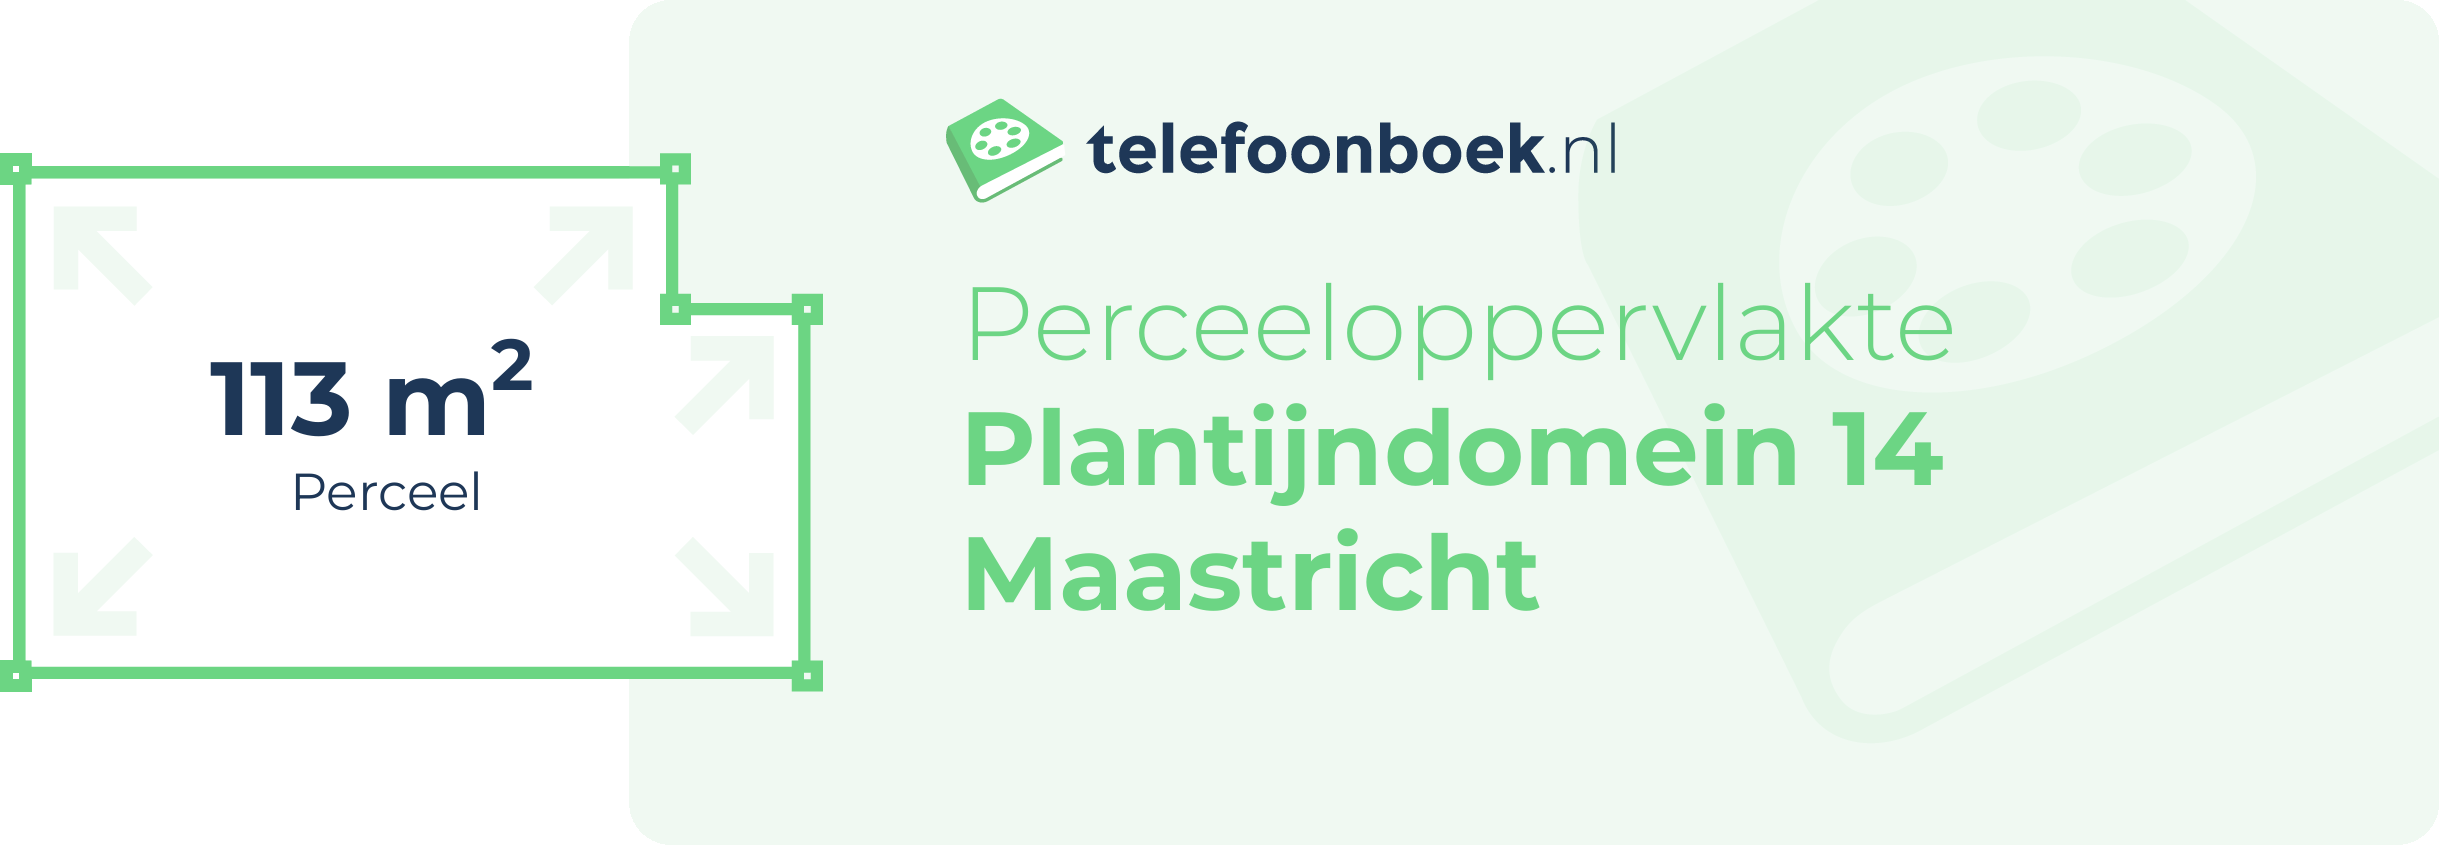 Perceeloppervlakte Plantijndomein 14 Maastricht